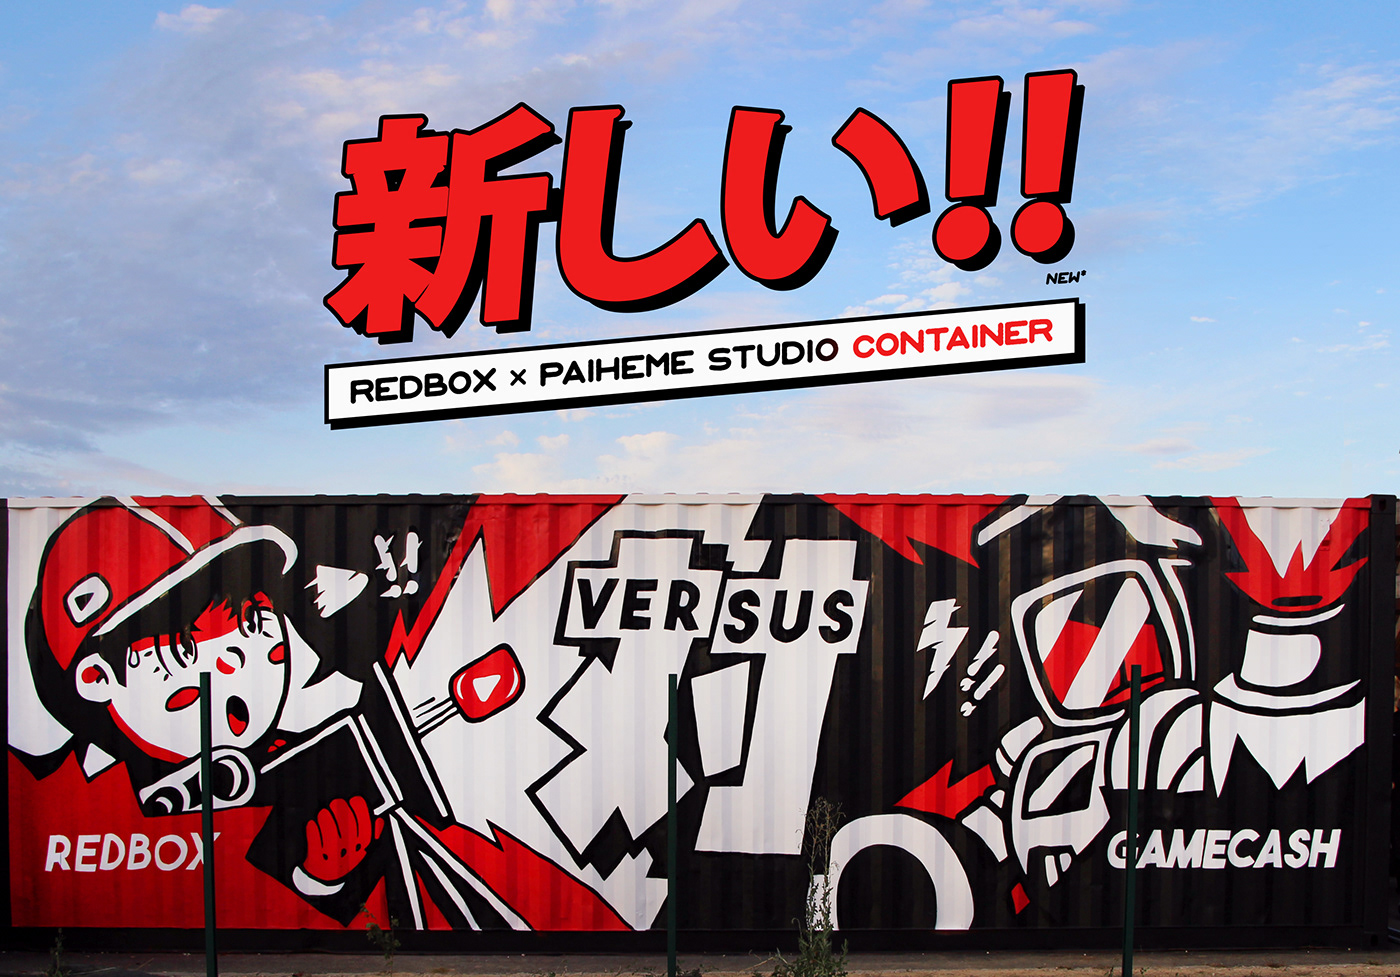 paiheme paiheme studio redbox amixem japapese art Graffiti container youtube Vodk joyca